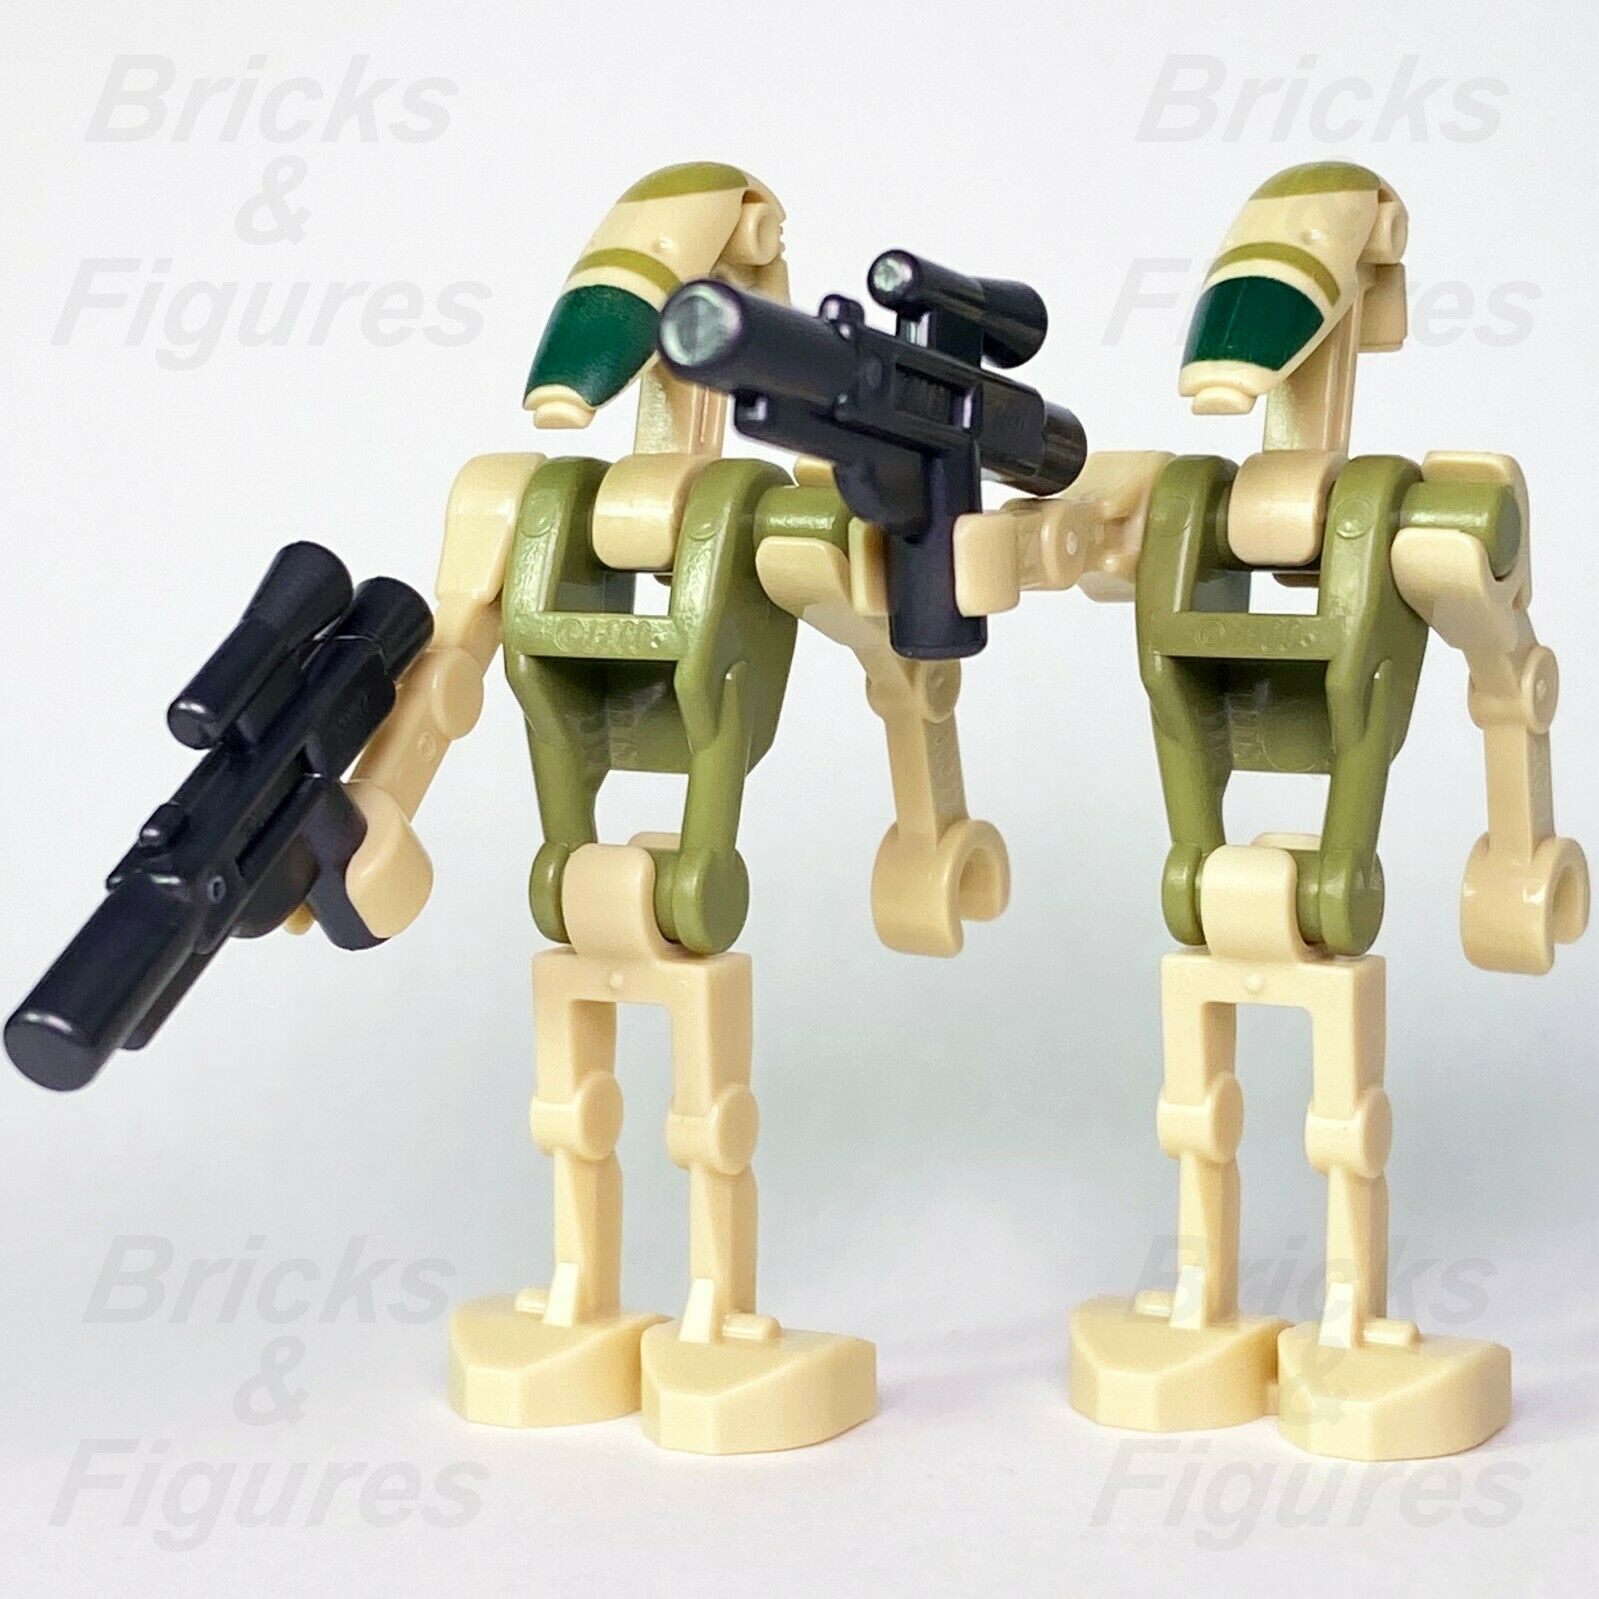 2 x Star Wars LEGO Kashyyyk Battle Droid Minifigure from sets 75234 75233 75283 - Bricks & Figures